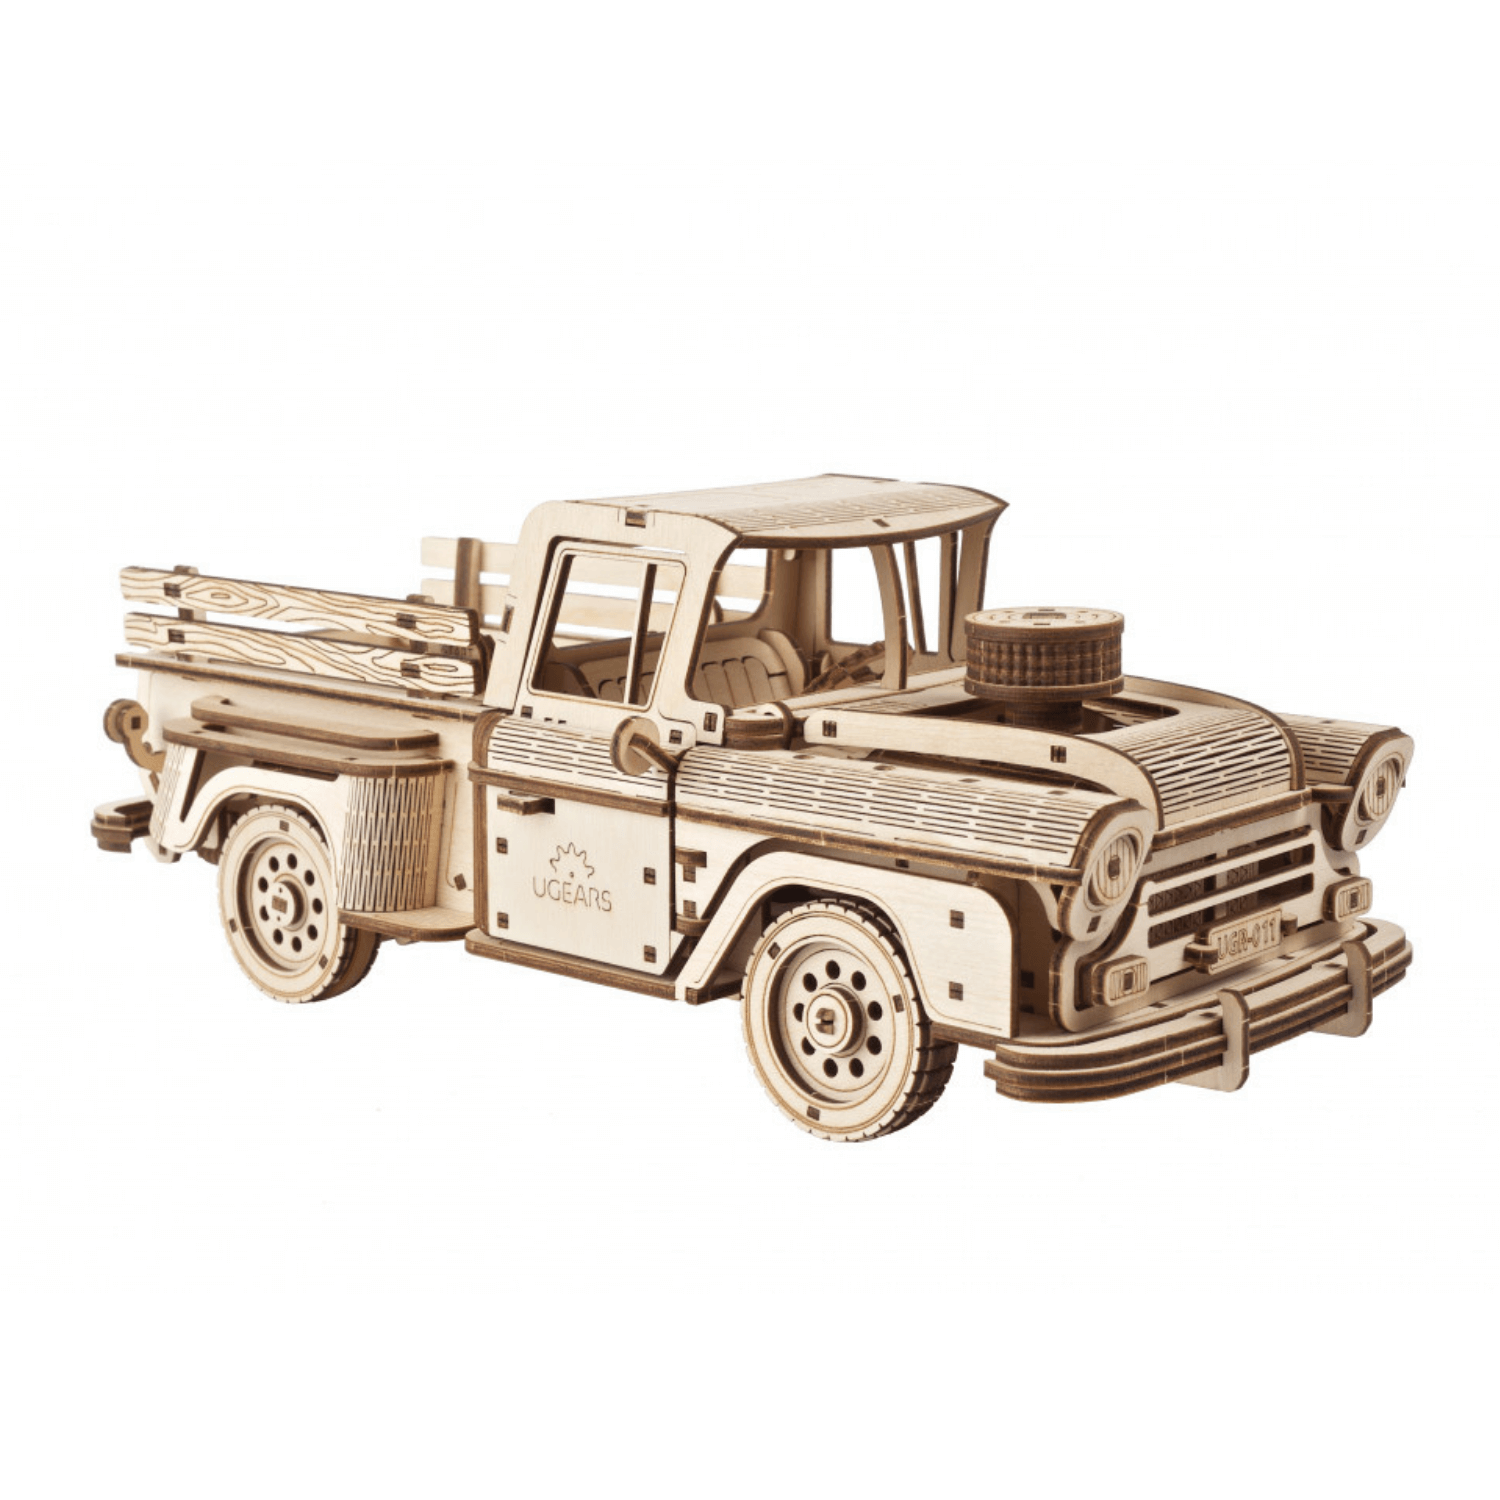 Pickup Lumberjack-Mechanisches Holzpuzzle-Ugears--